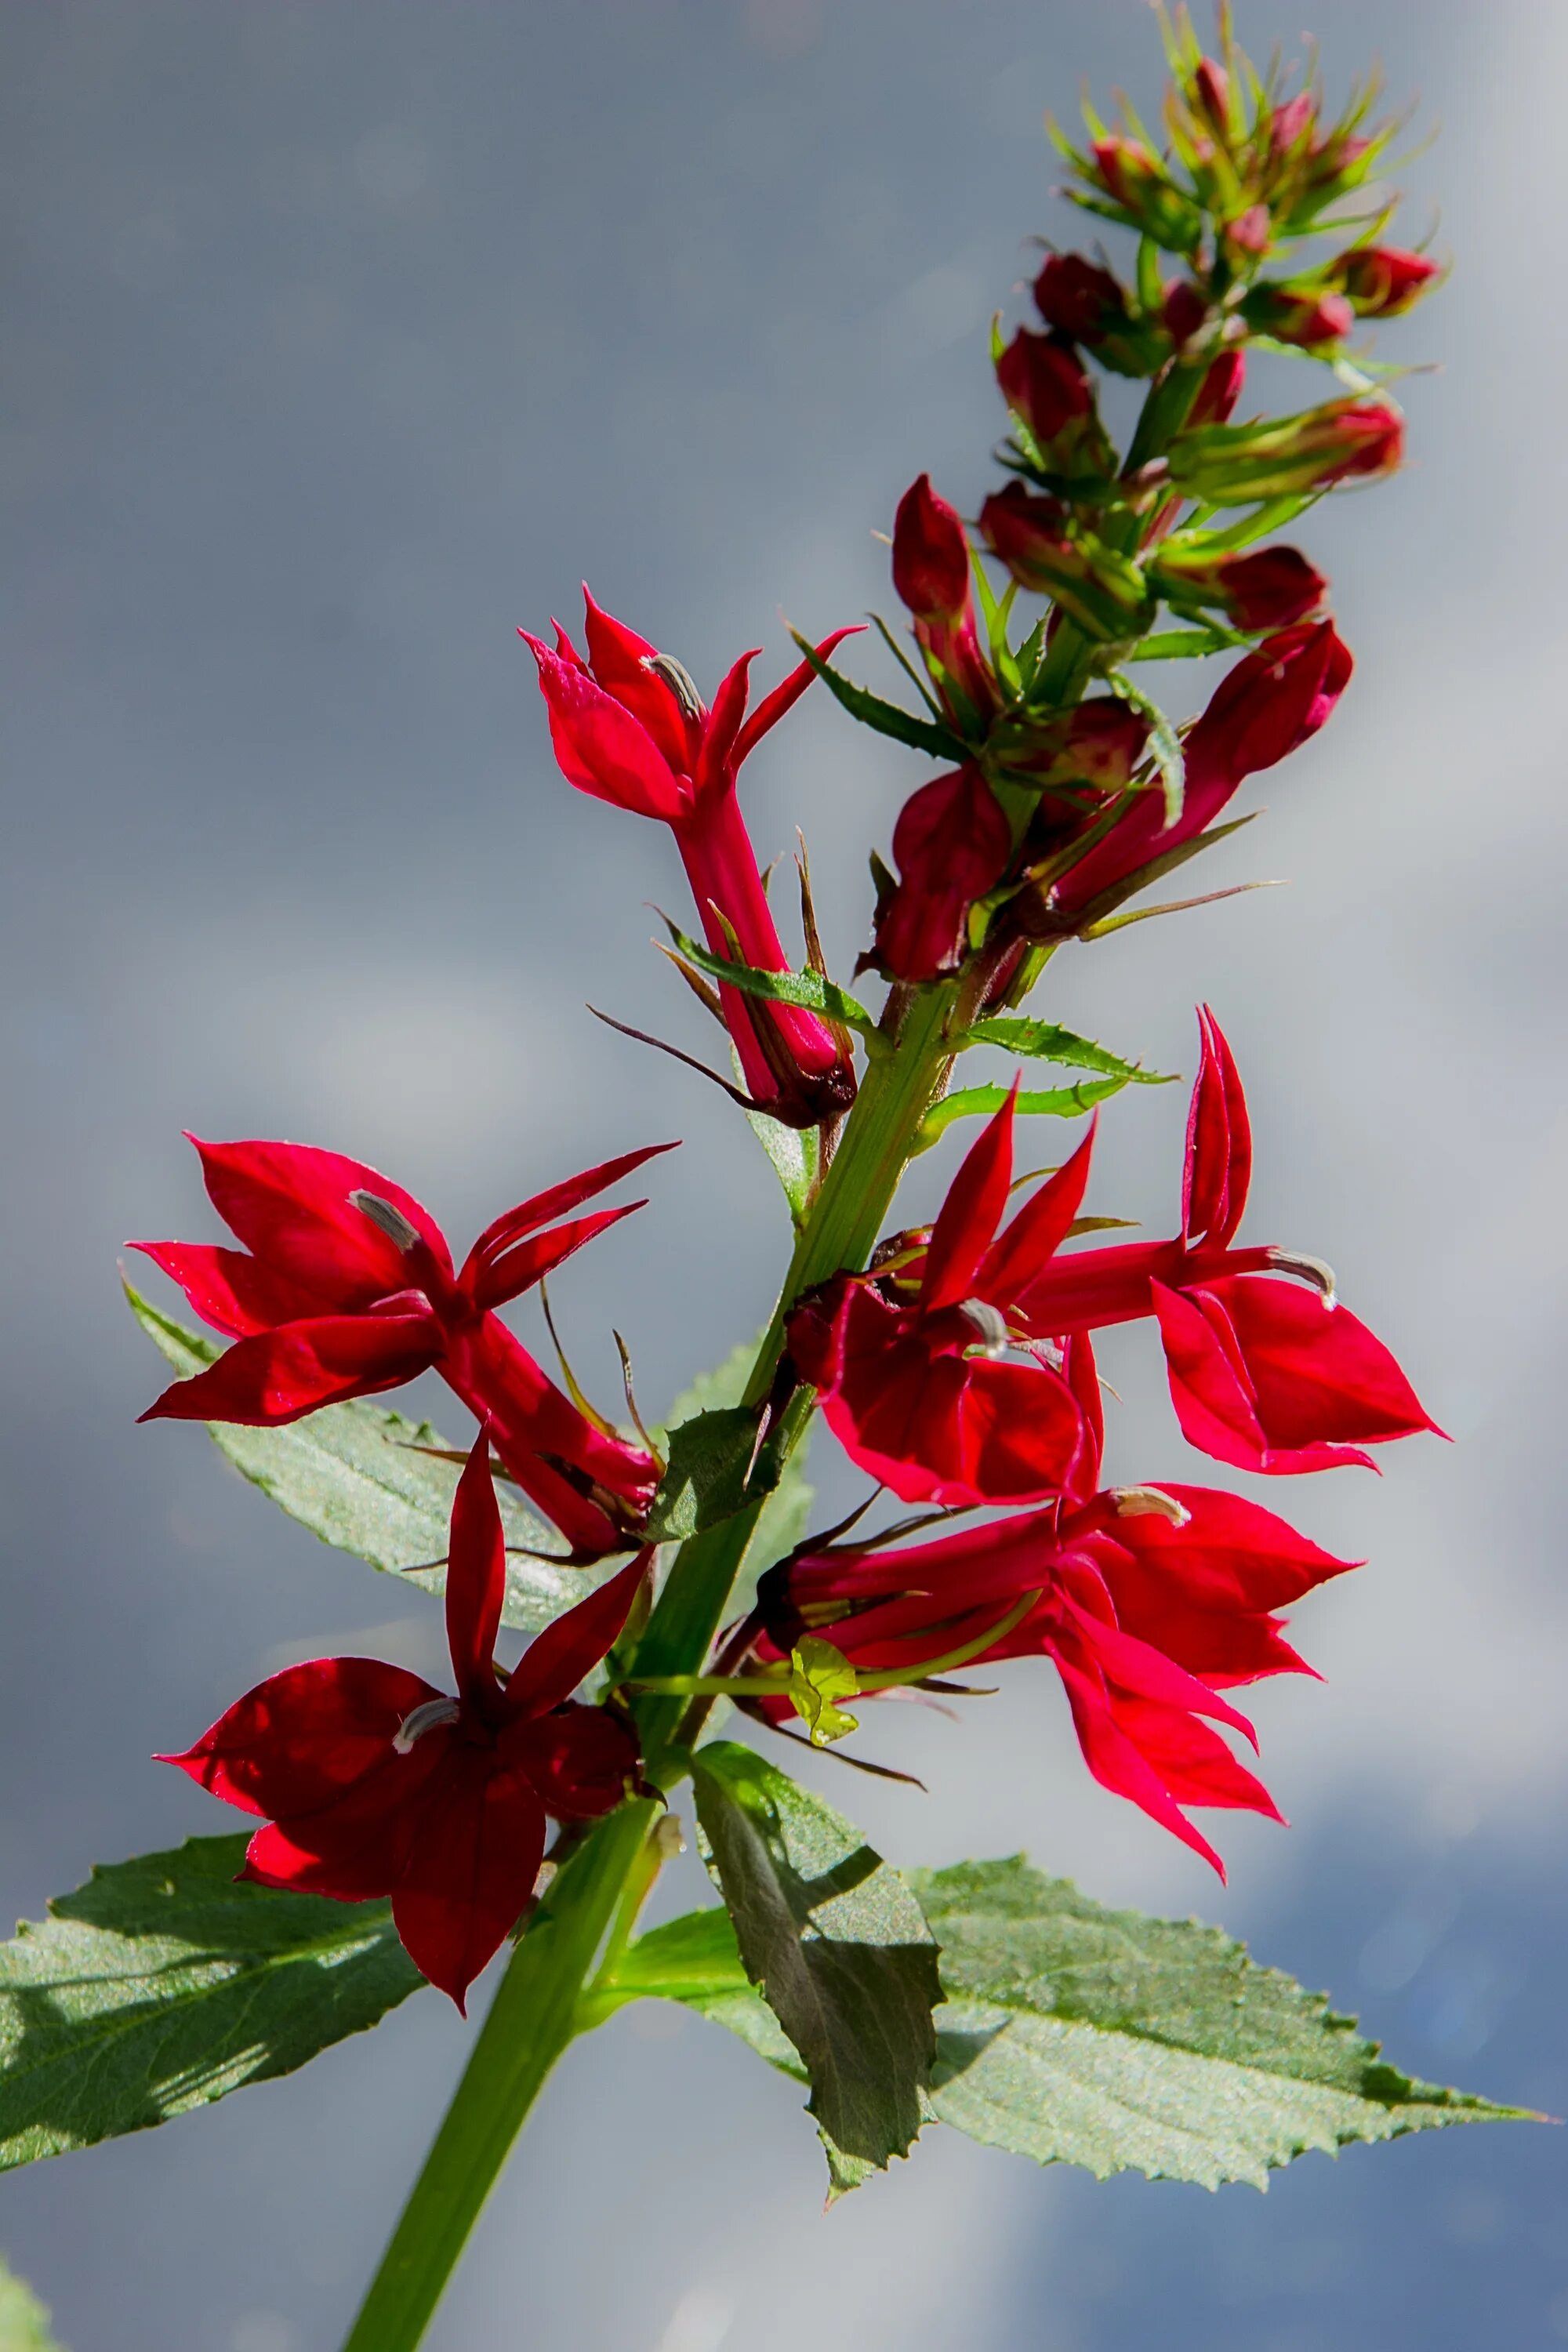 Red plant. Лобелия красная. Лобелия прекрасная. Лобелия прекрасная вулкан ред. Цветок сперофириум.